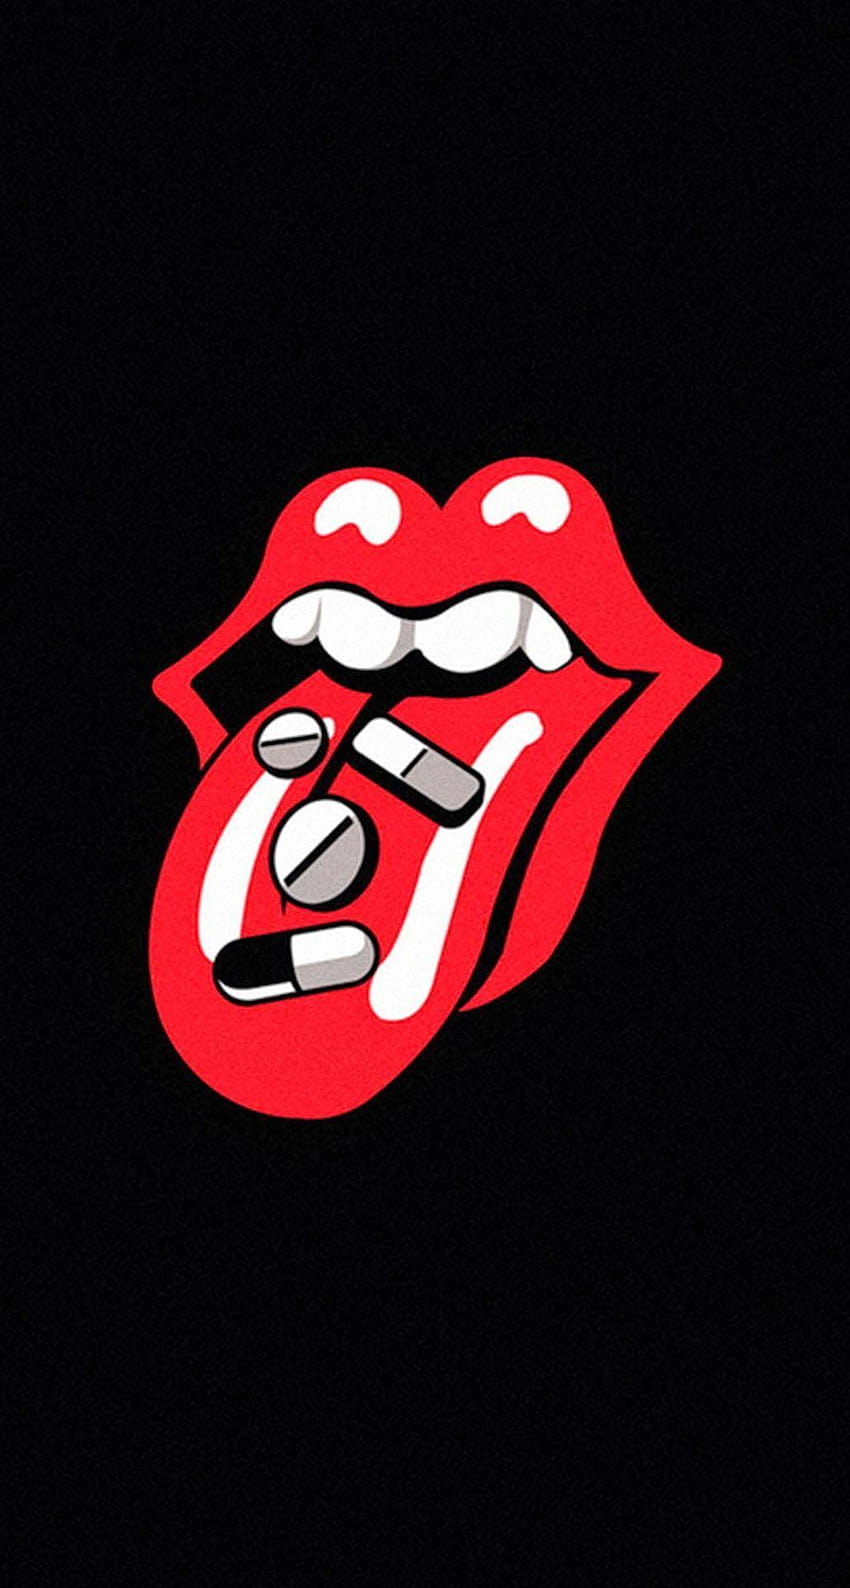 Rolling Stones Tongue Pills Drugs iPhone 6 Plus, sin drogas fondo de pantalla del teléfono